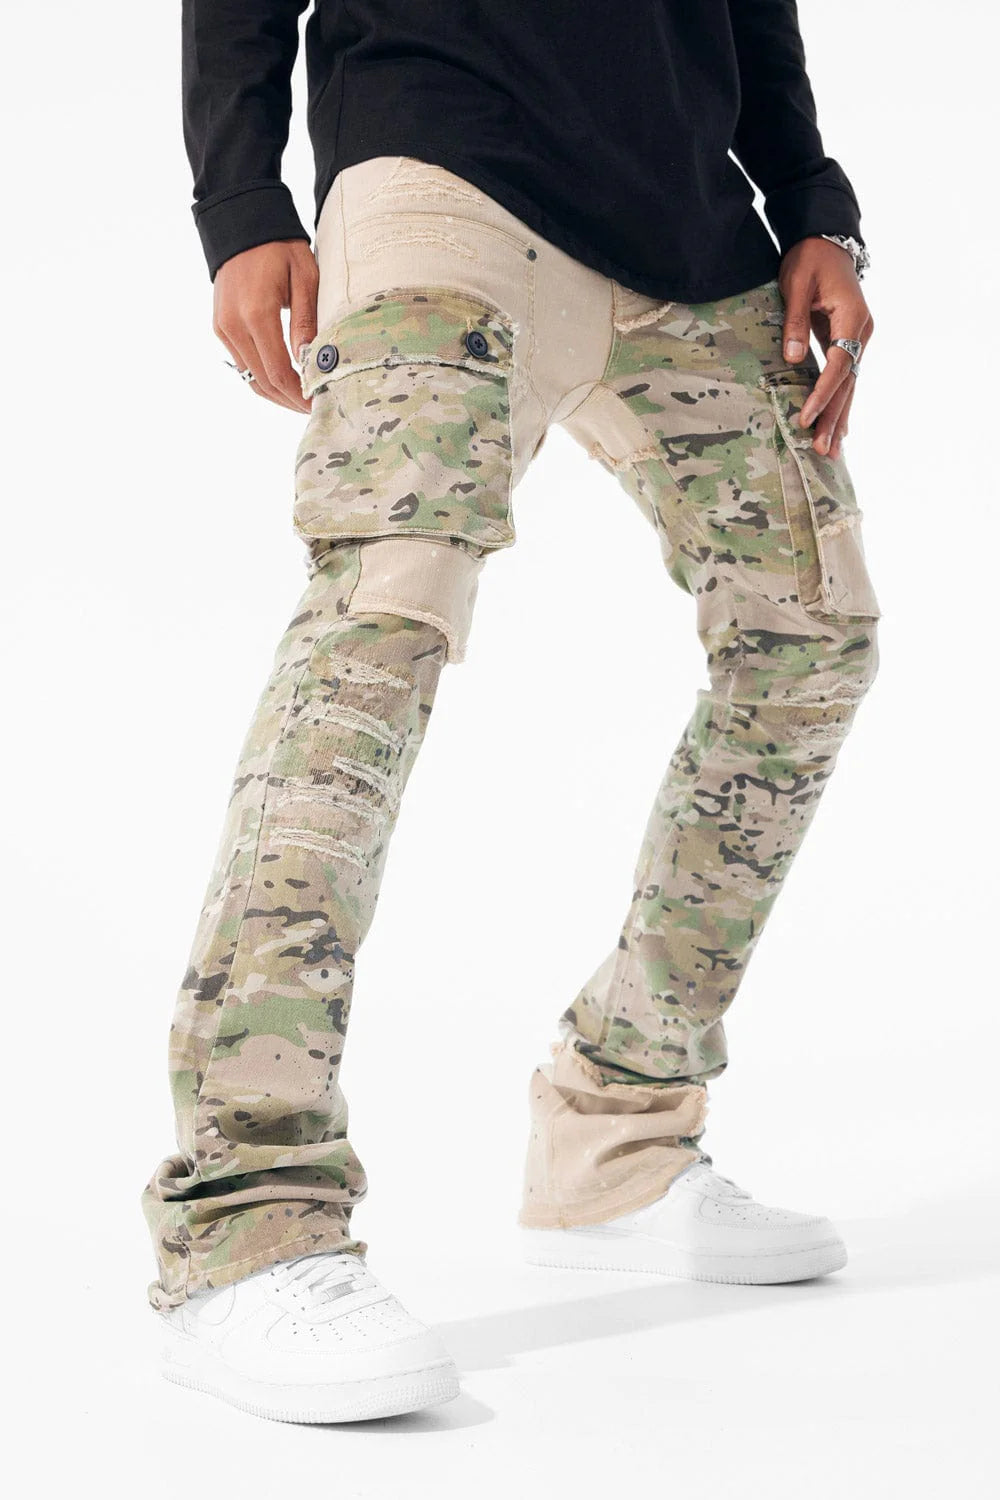 Ross Stacked - Platoon Cargo Denim Jeans - Camo 2.0